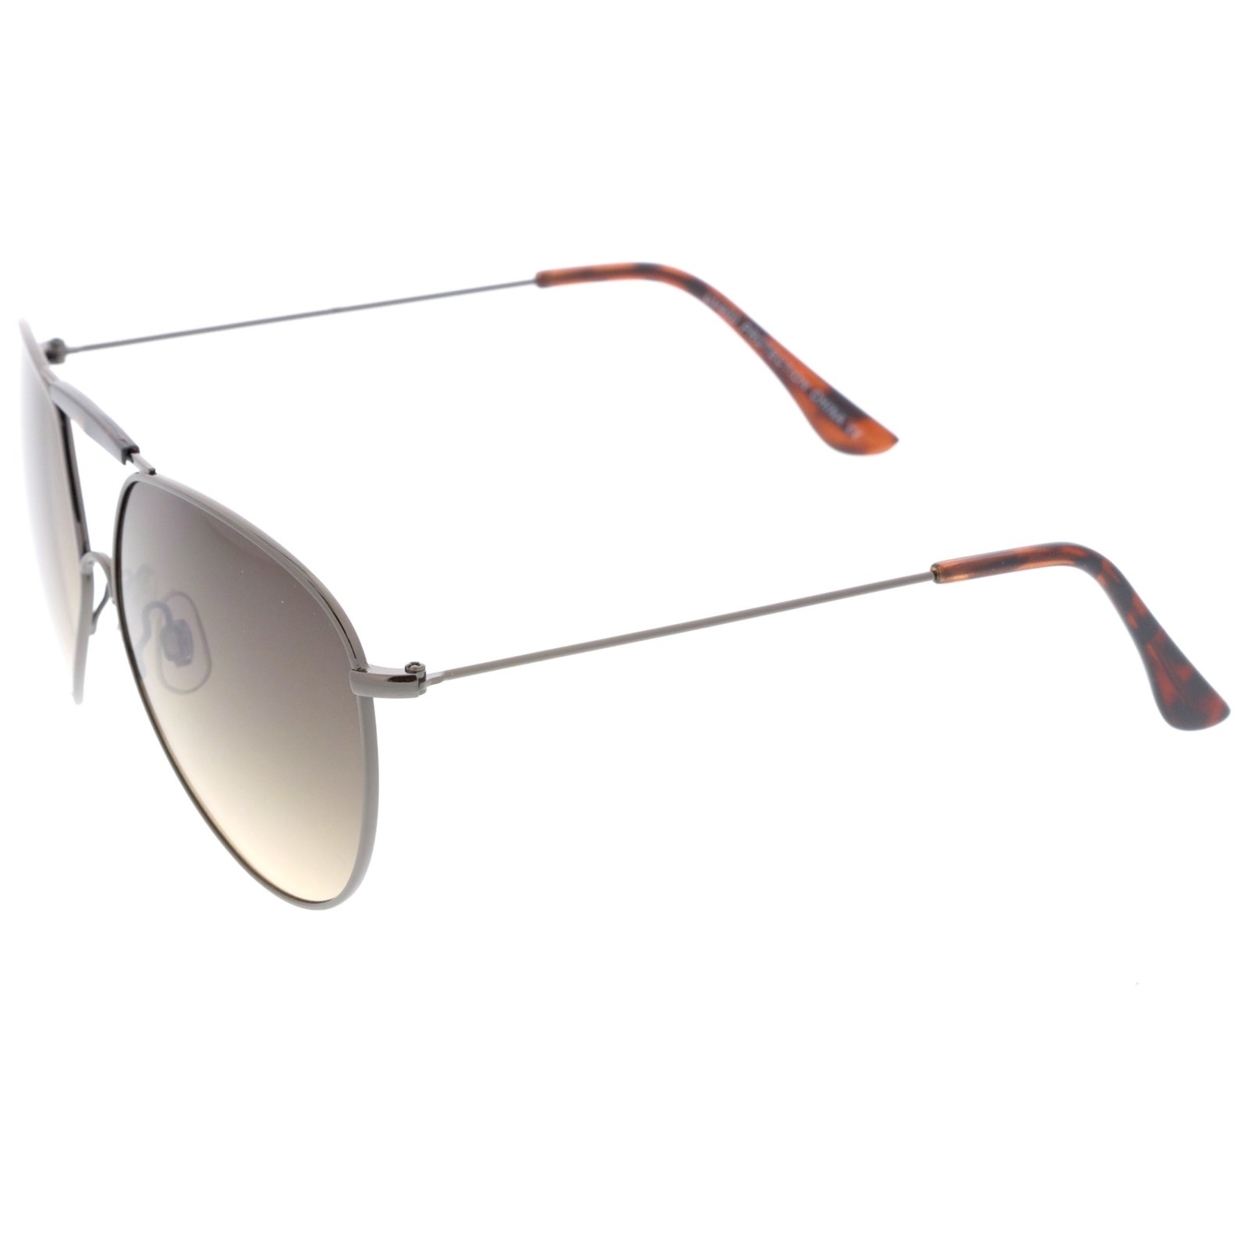 Casual Brow Bar Detail Slim Temple Metal Frame Aviator Sunglasses 62mm - Gunmetal-Tortoise / Smoke Gradient